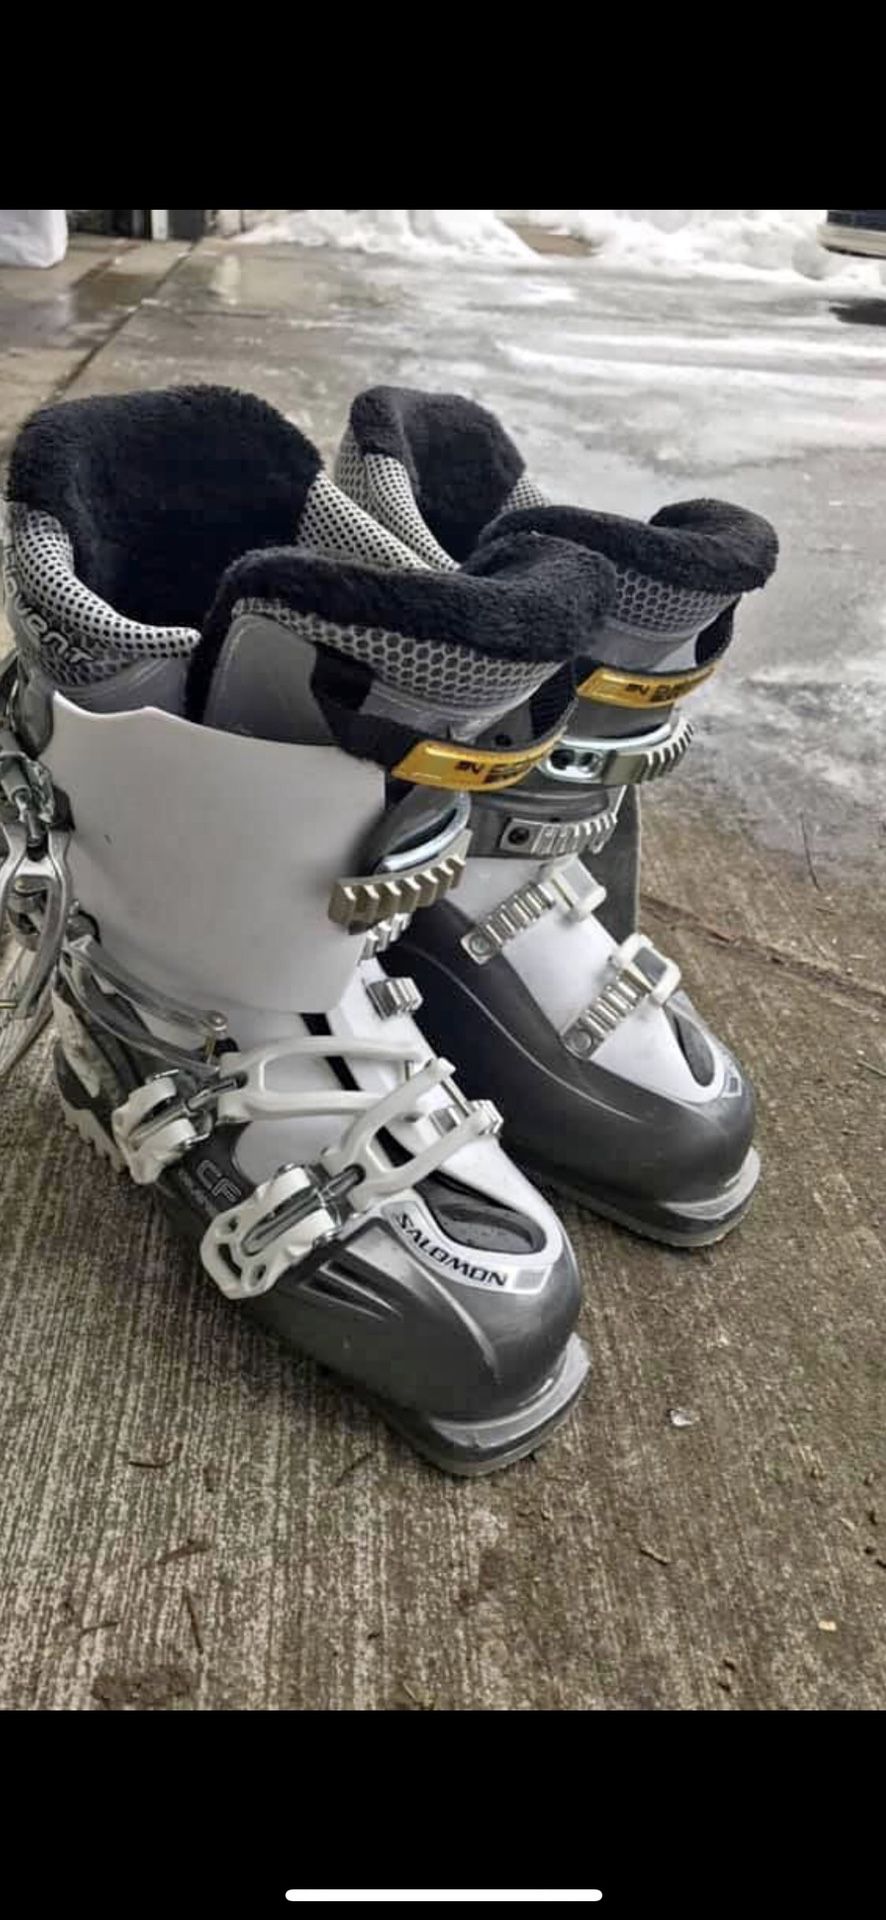 Salomon ski boots -women’s size 24